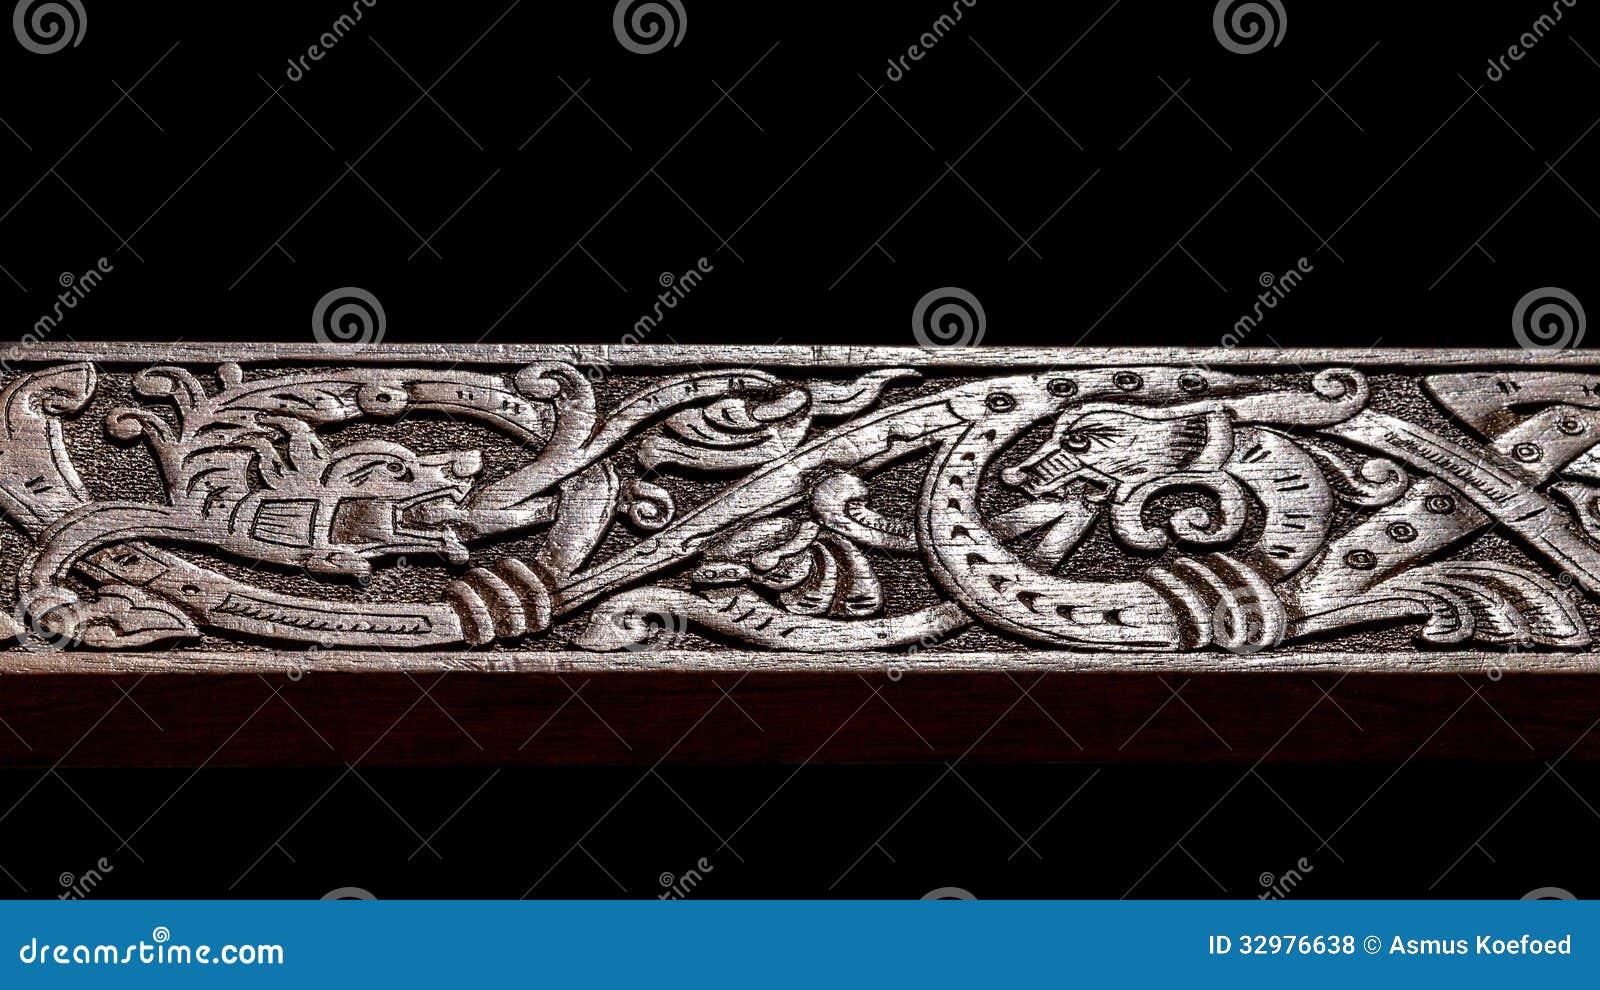 viking-wood-carving-like-depicting-two-fire-breathing-dragons-fighting-32976638.jpg